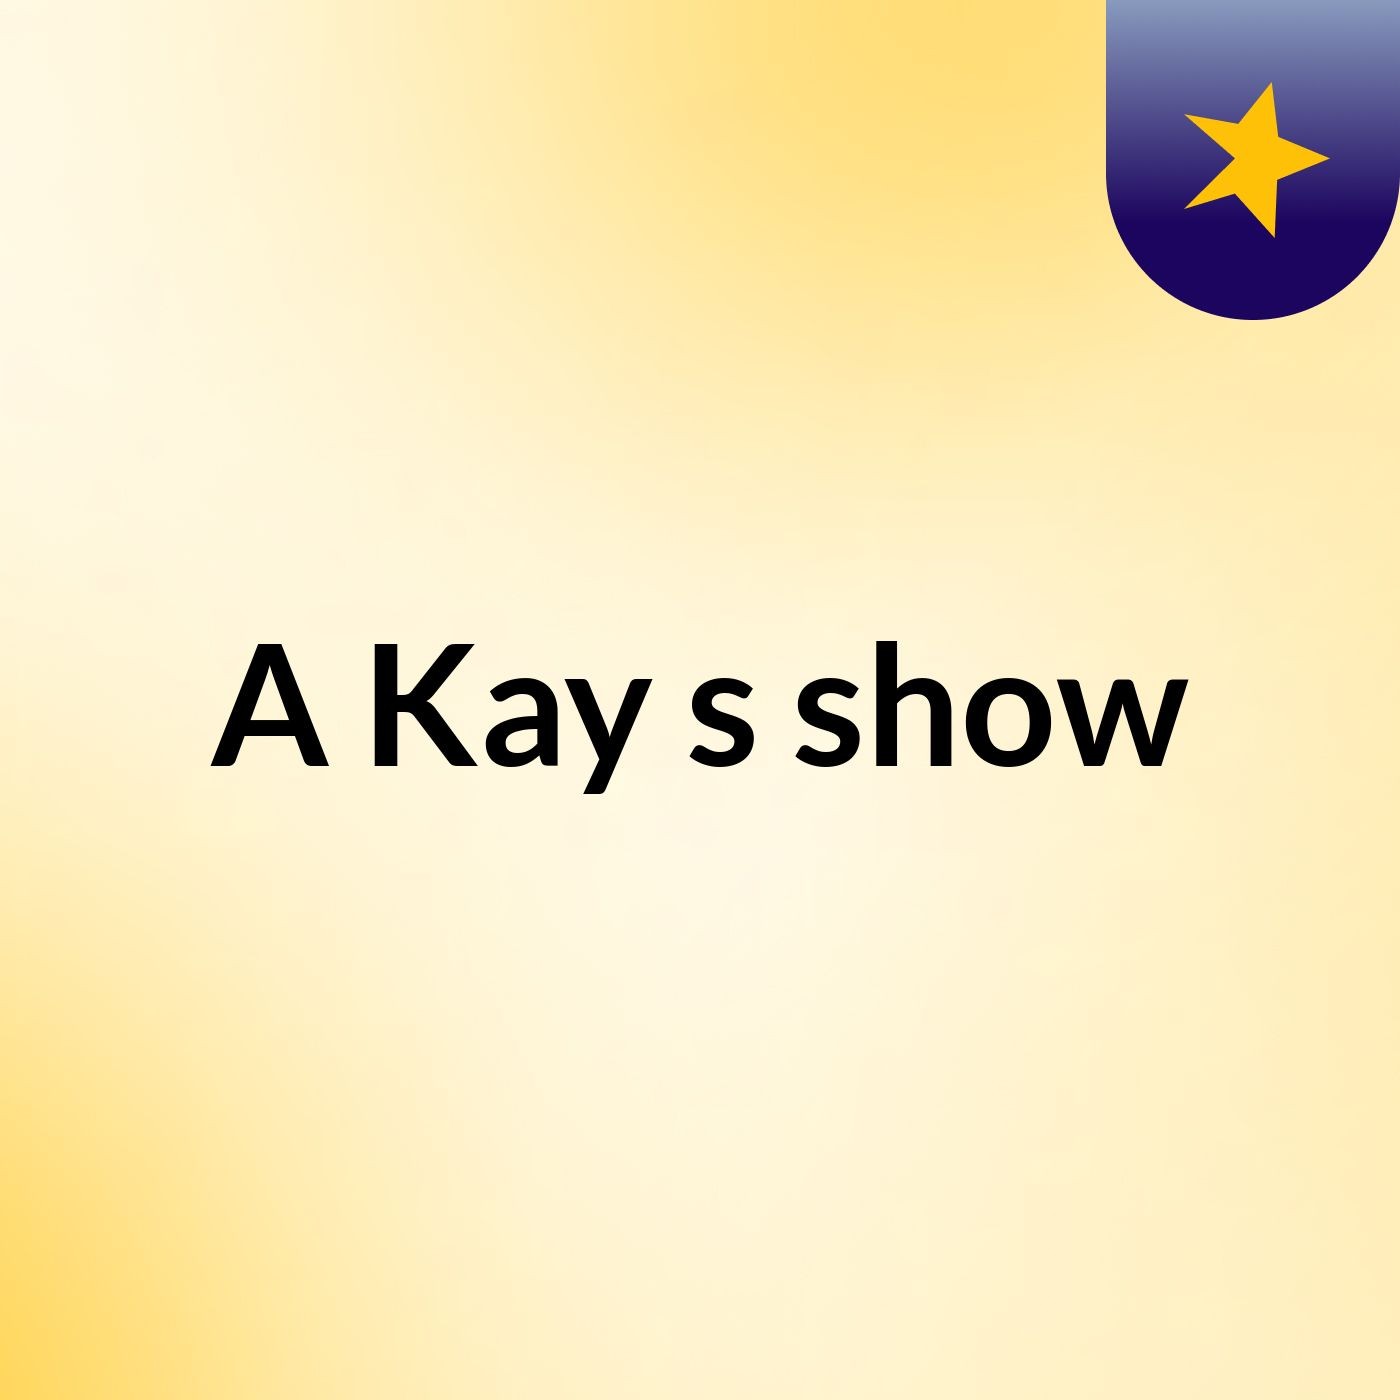 A Kay's show